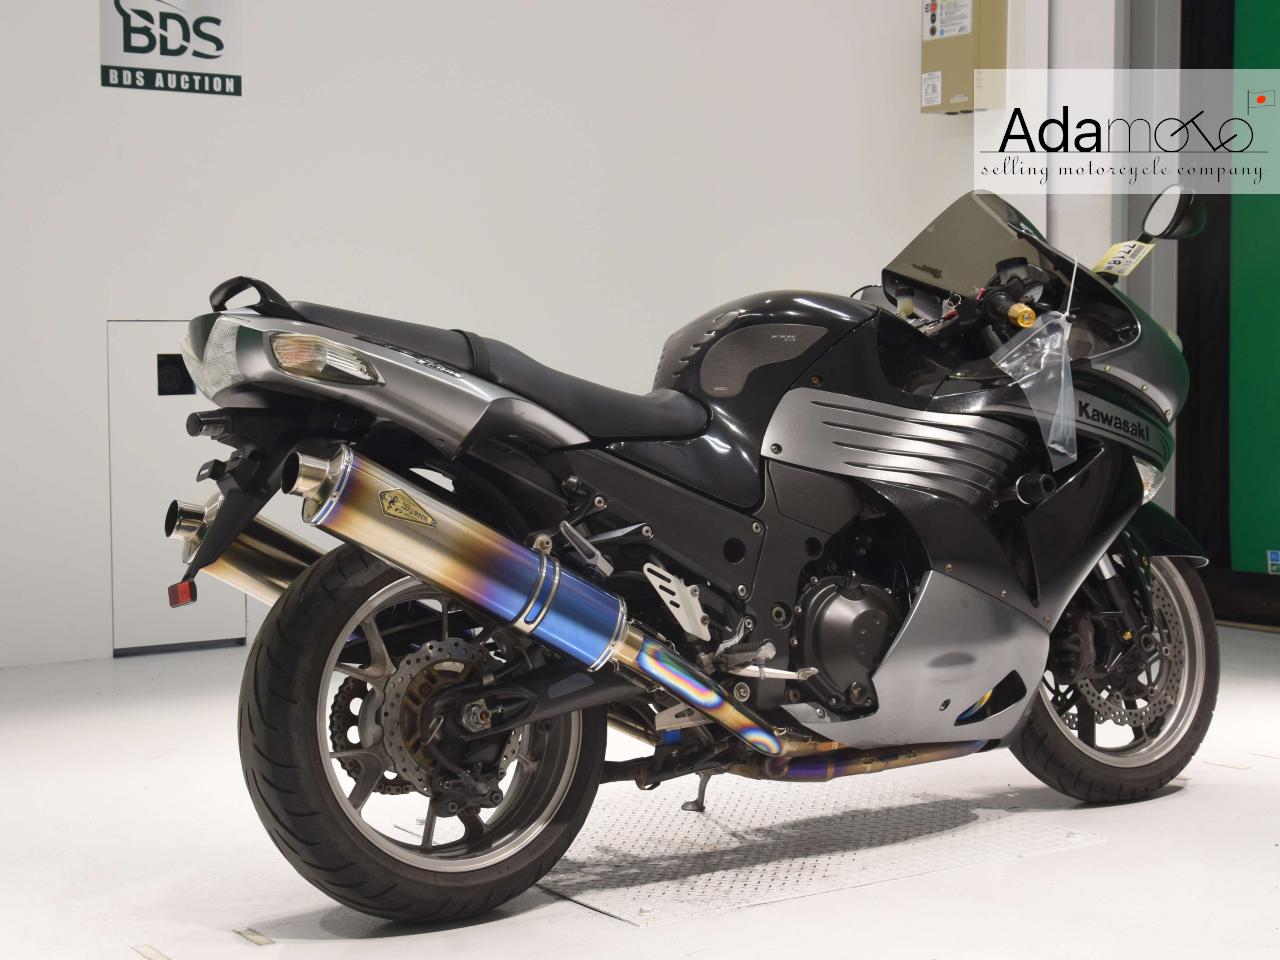 Kawasaki ZZ R1400 - Adamoto - Motorcycles from Japan